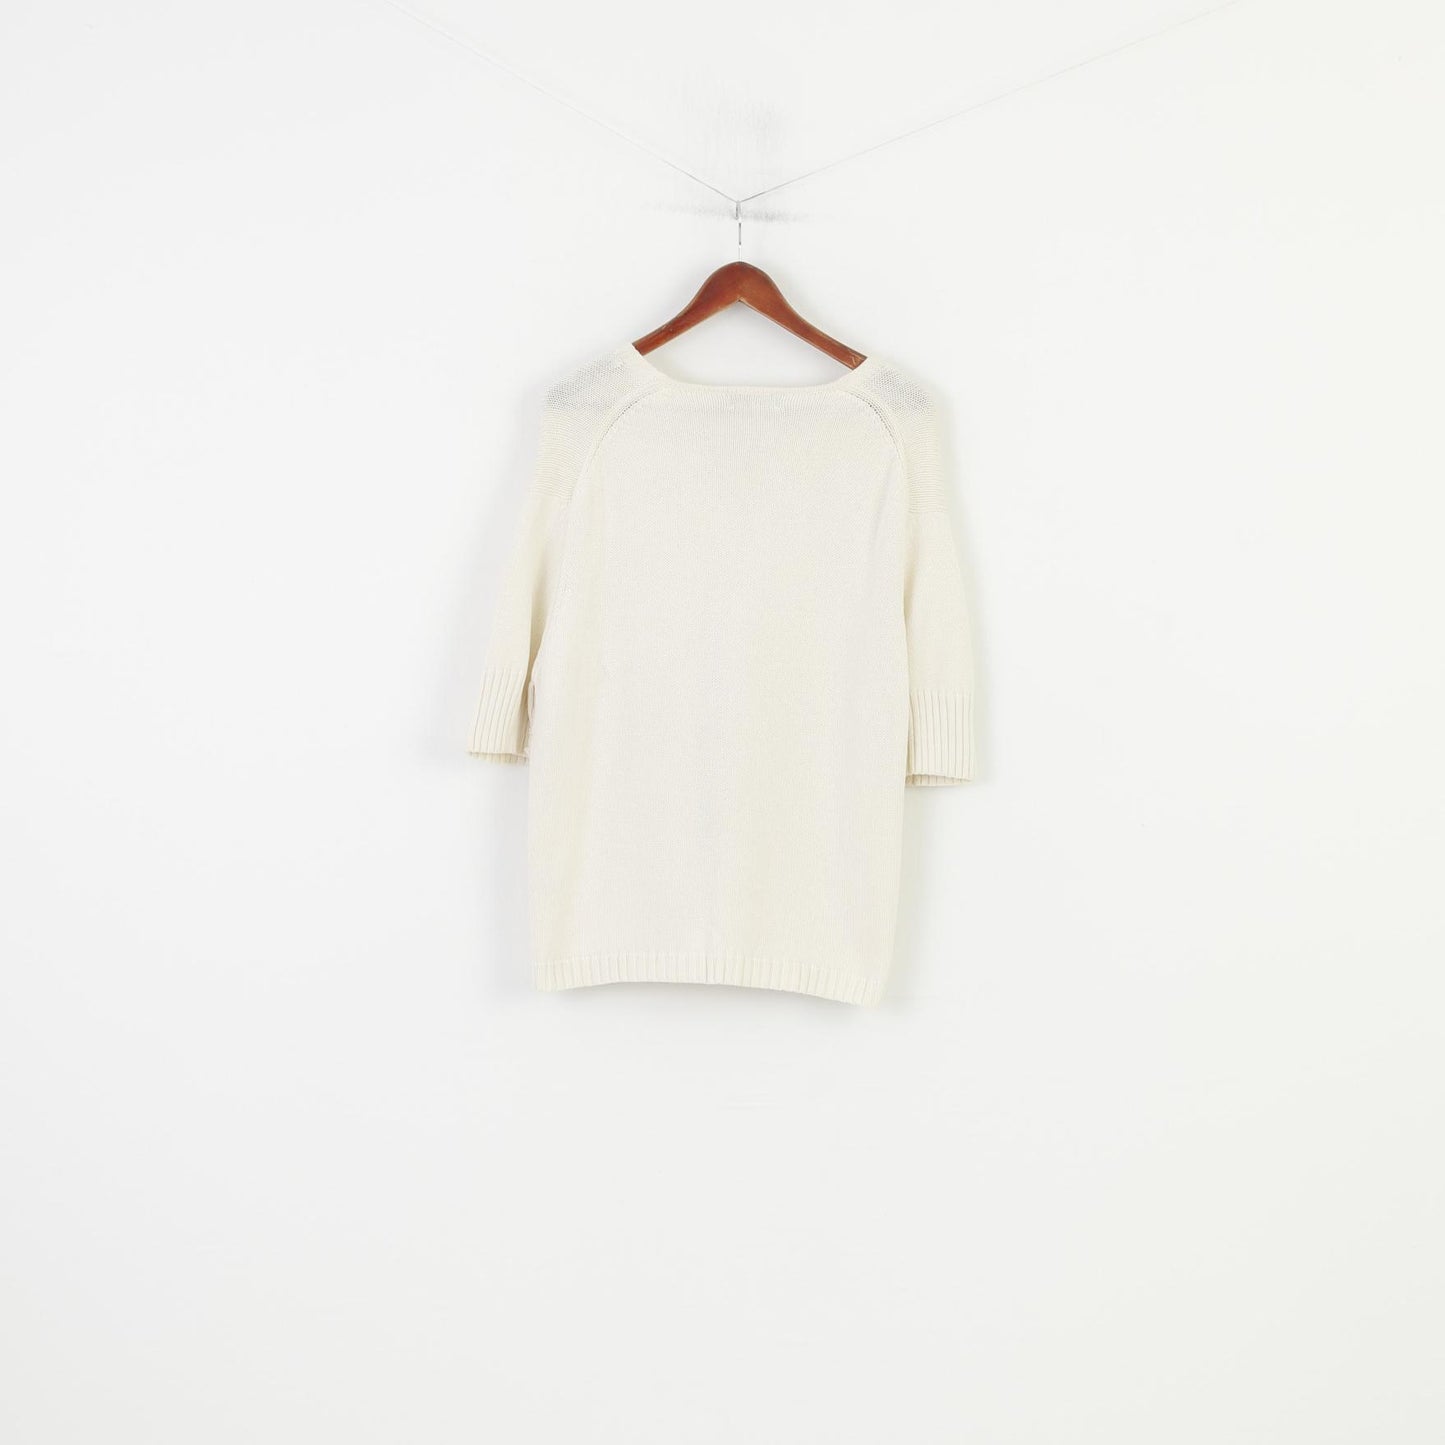 Marco Pecci Women L Jumper Cream Cotton Cardigan Short Sleeve Vintage V Neck Sweater